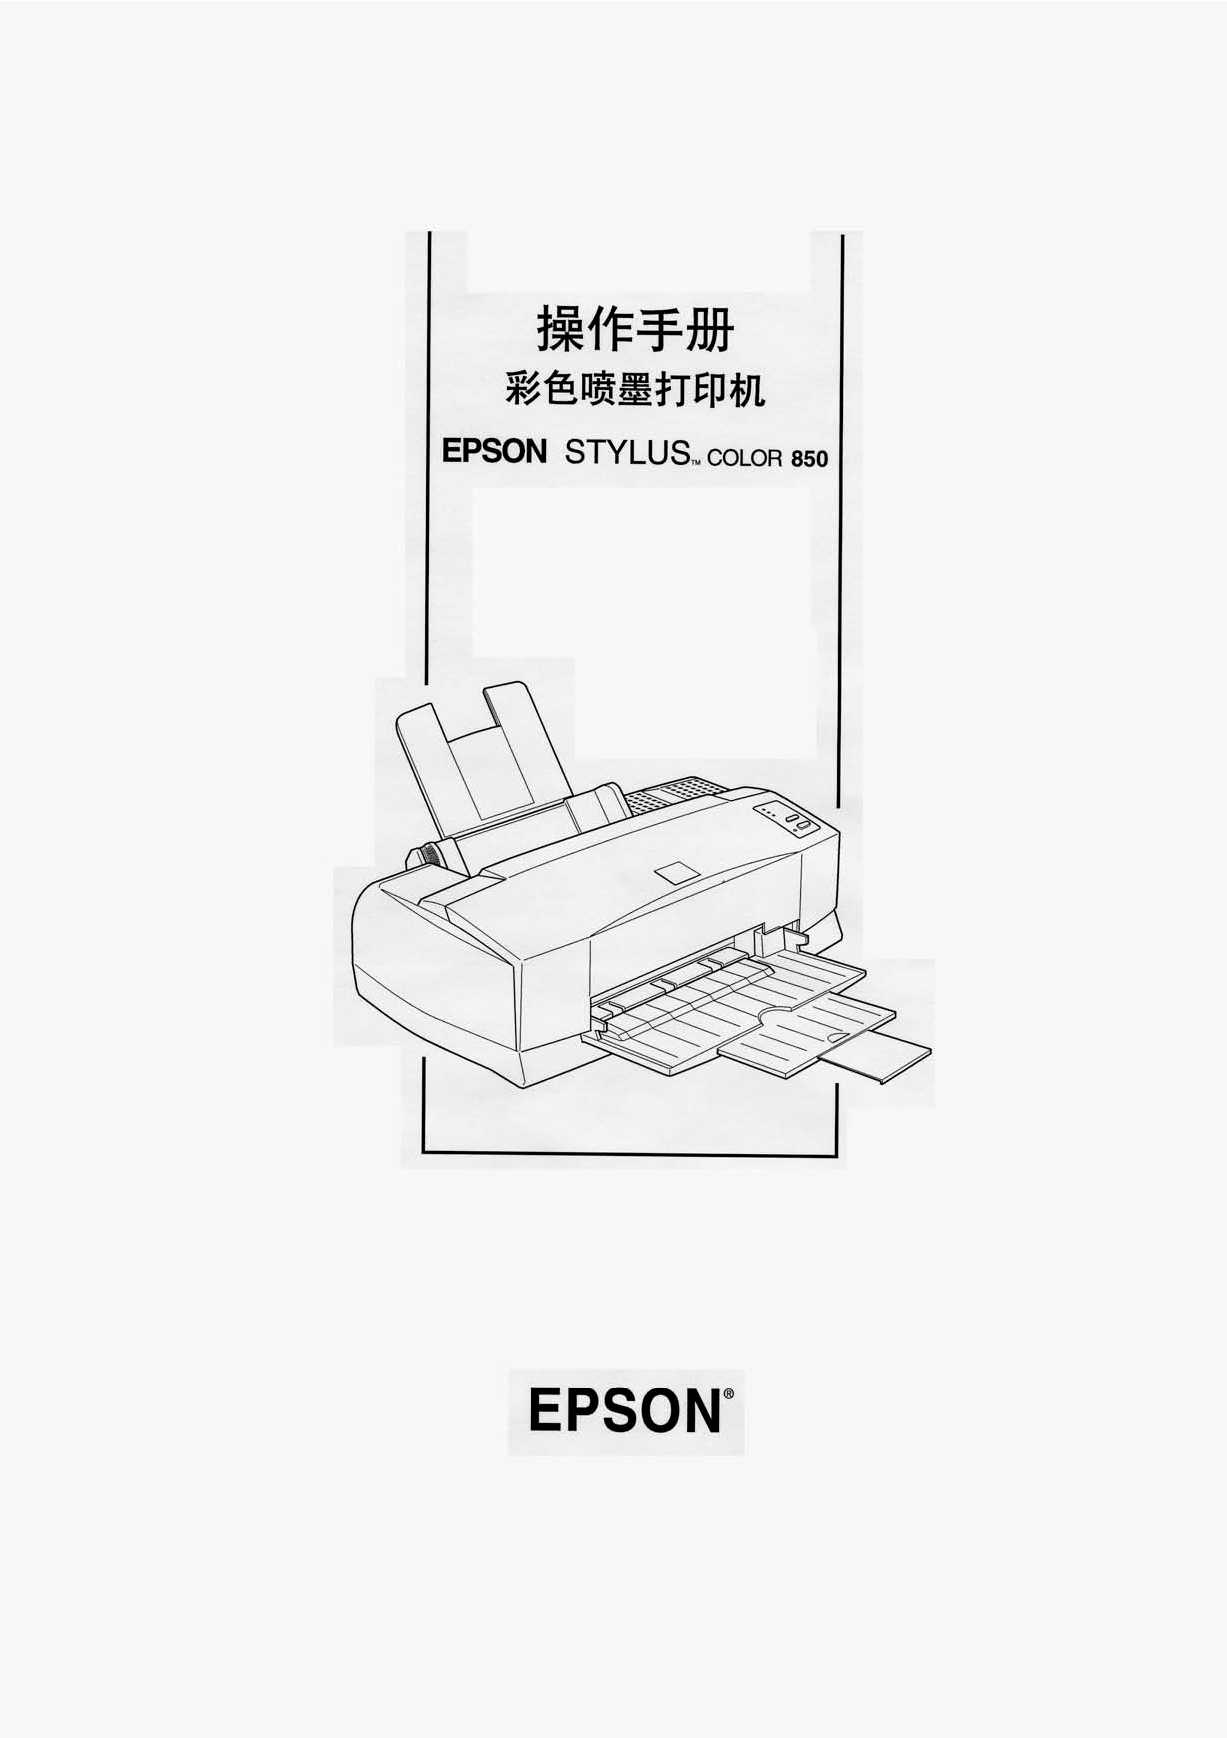 爱普生 Epson STYLUS COLOR 850 操作手册 封面